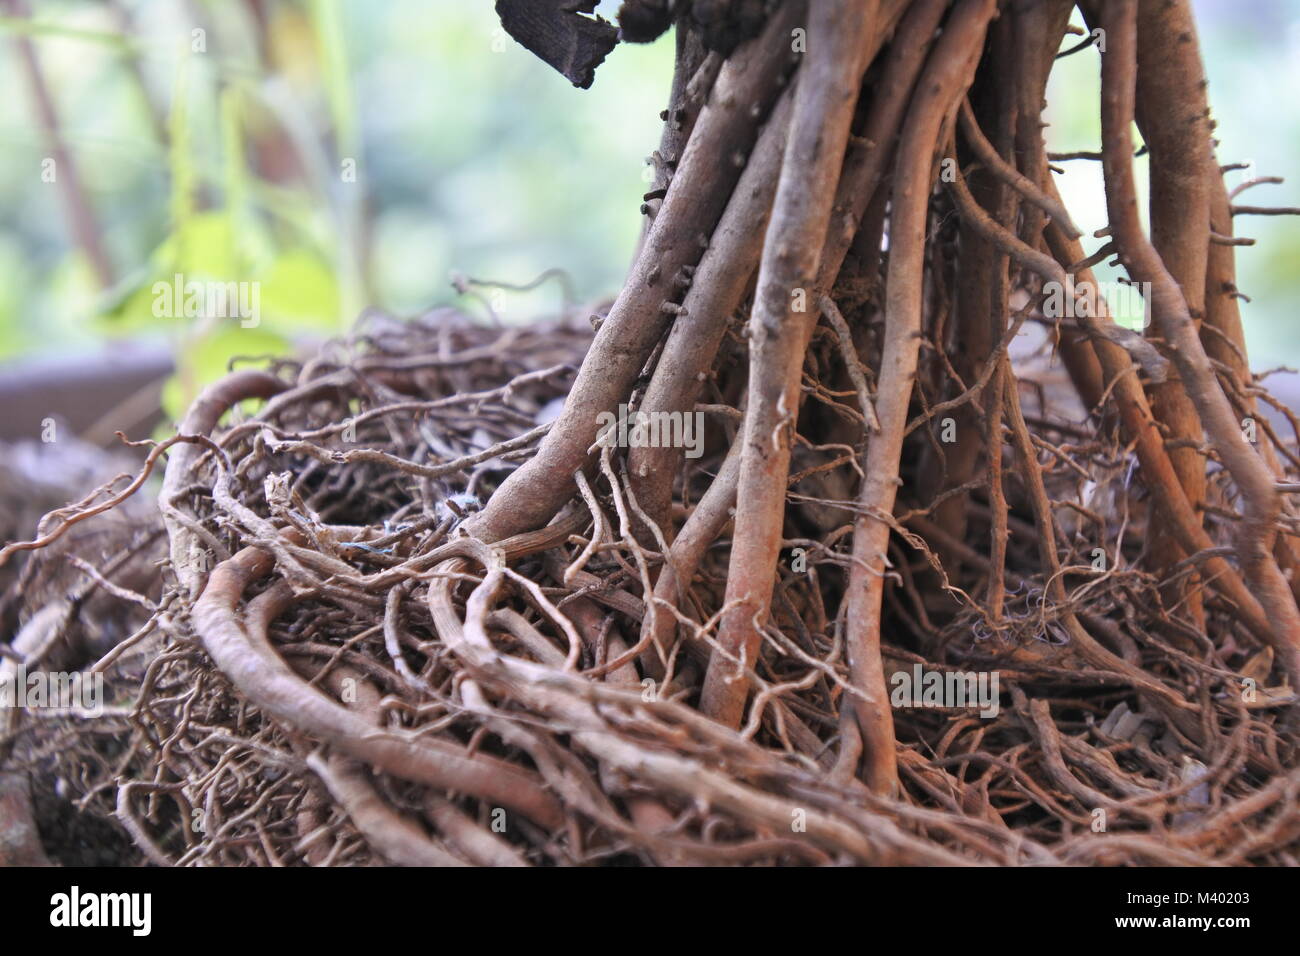 Palmera oder Palm plant root Ball aus einem Topf. Stockfoto